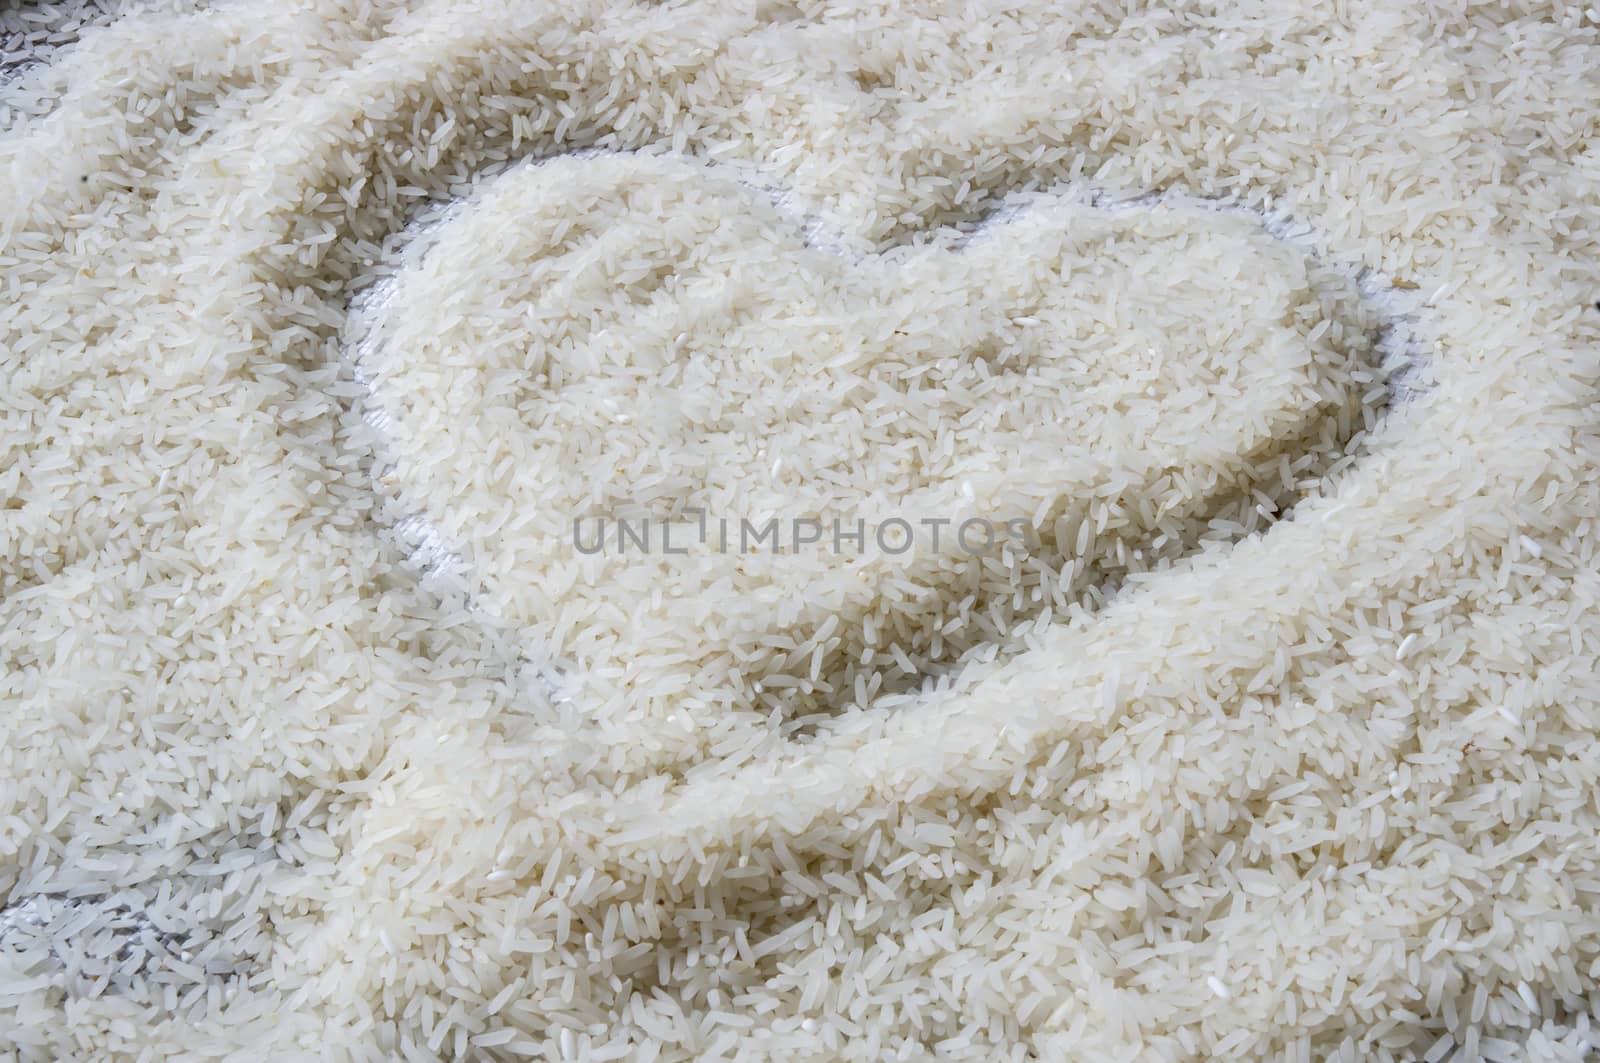 Uncooked jasmine rice by seksan44